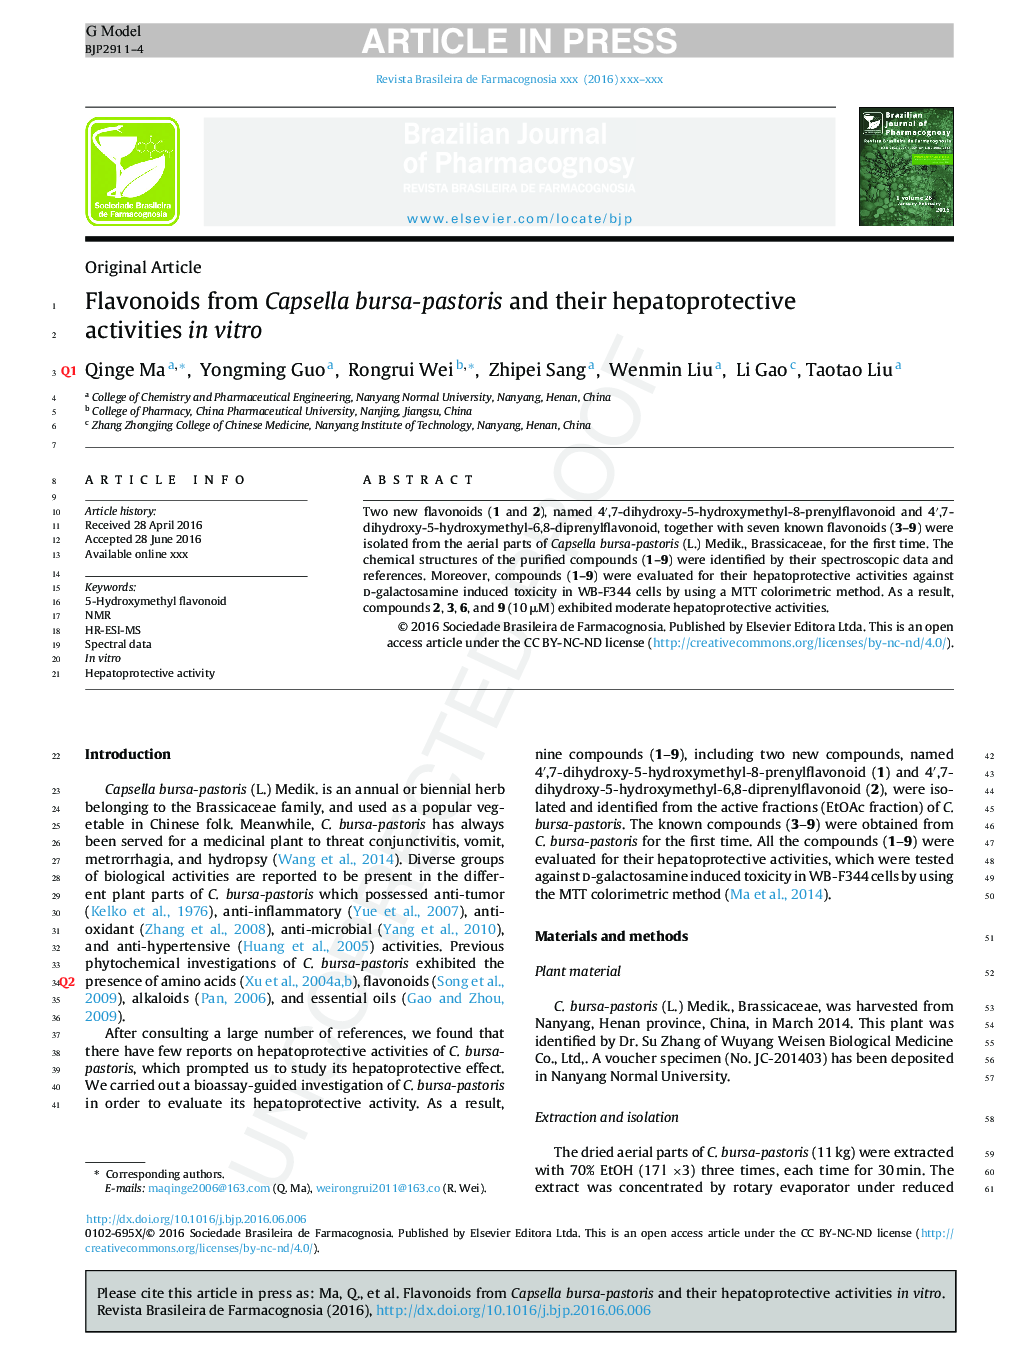 Flavonoids from Capsella bursa-pastoris and their hepatoprotective activities in vitro